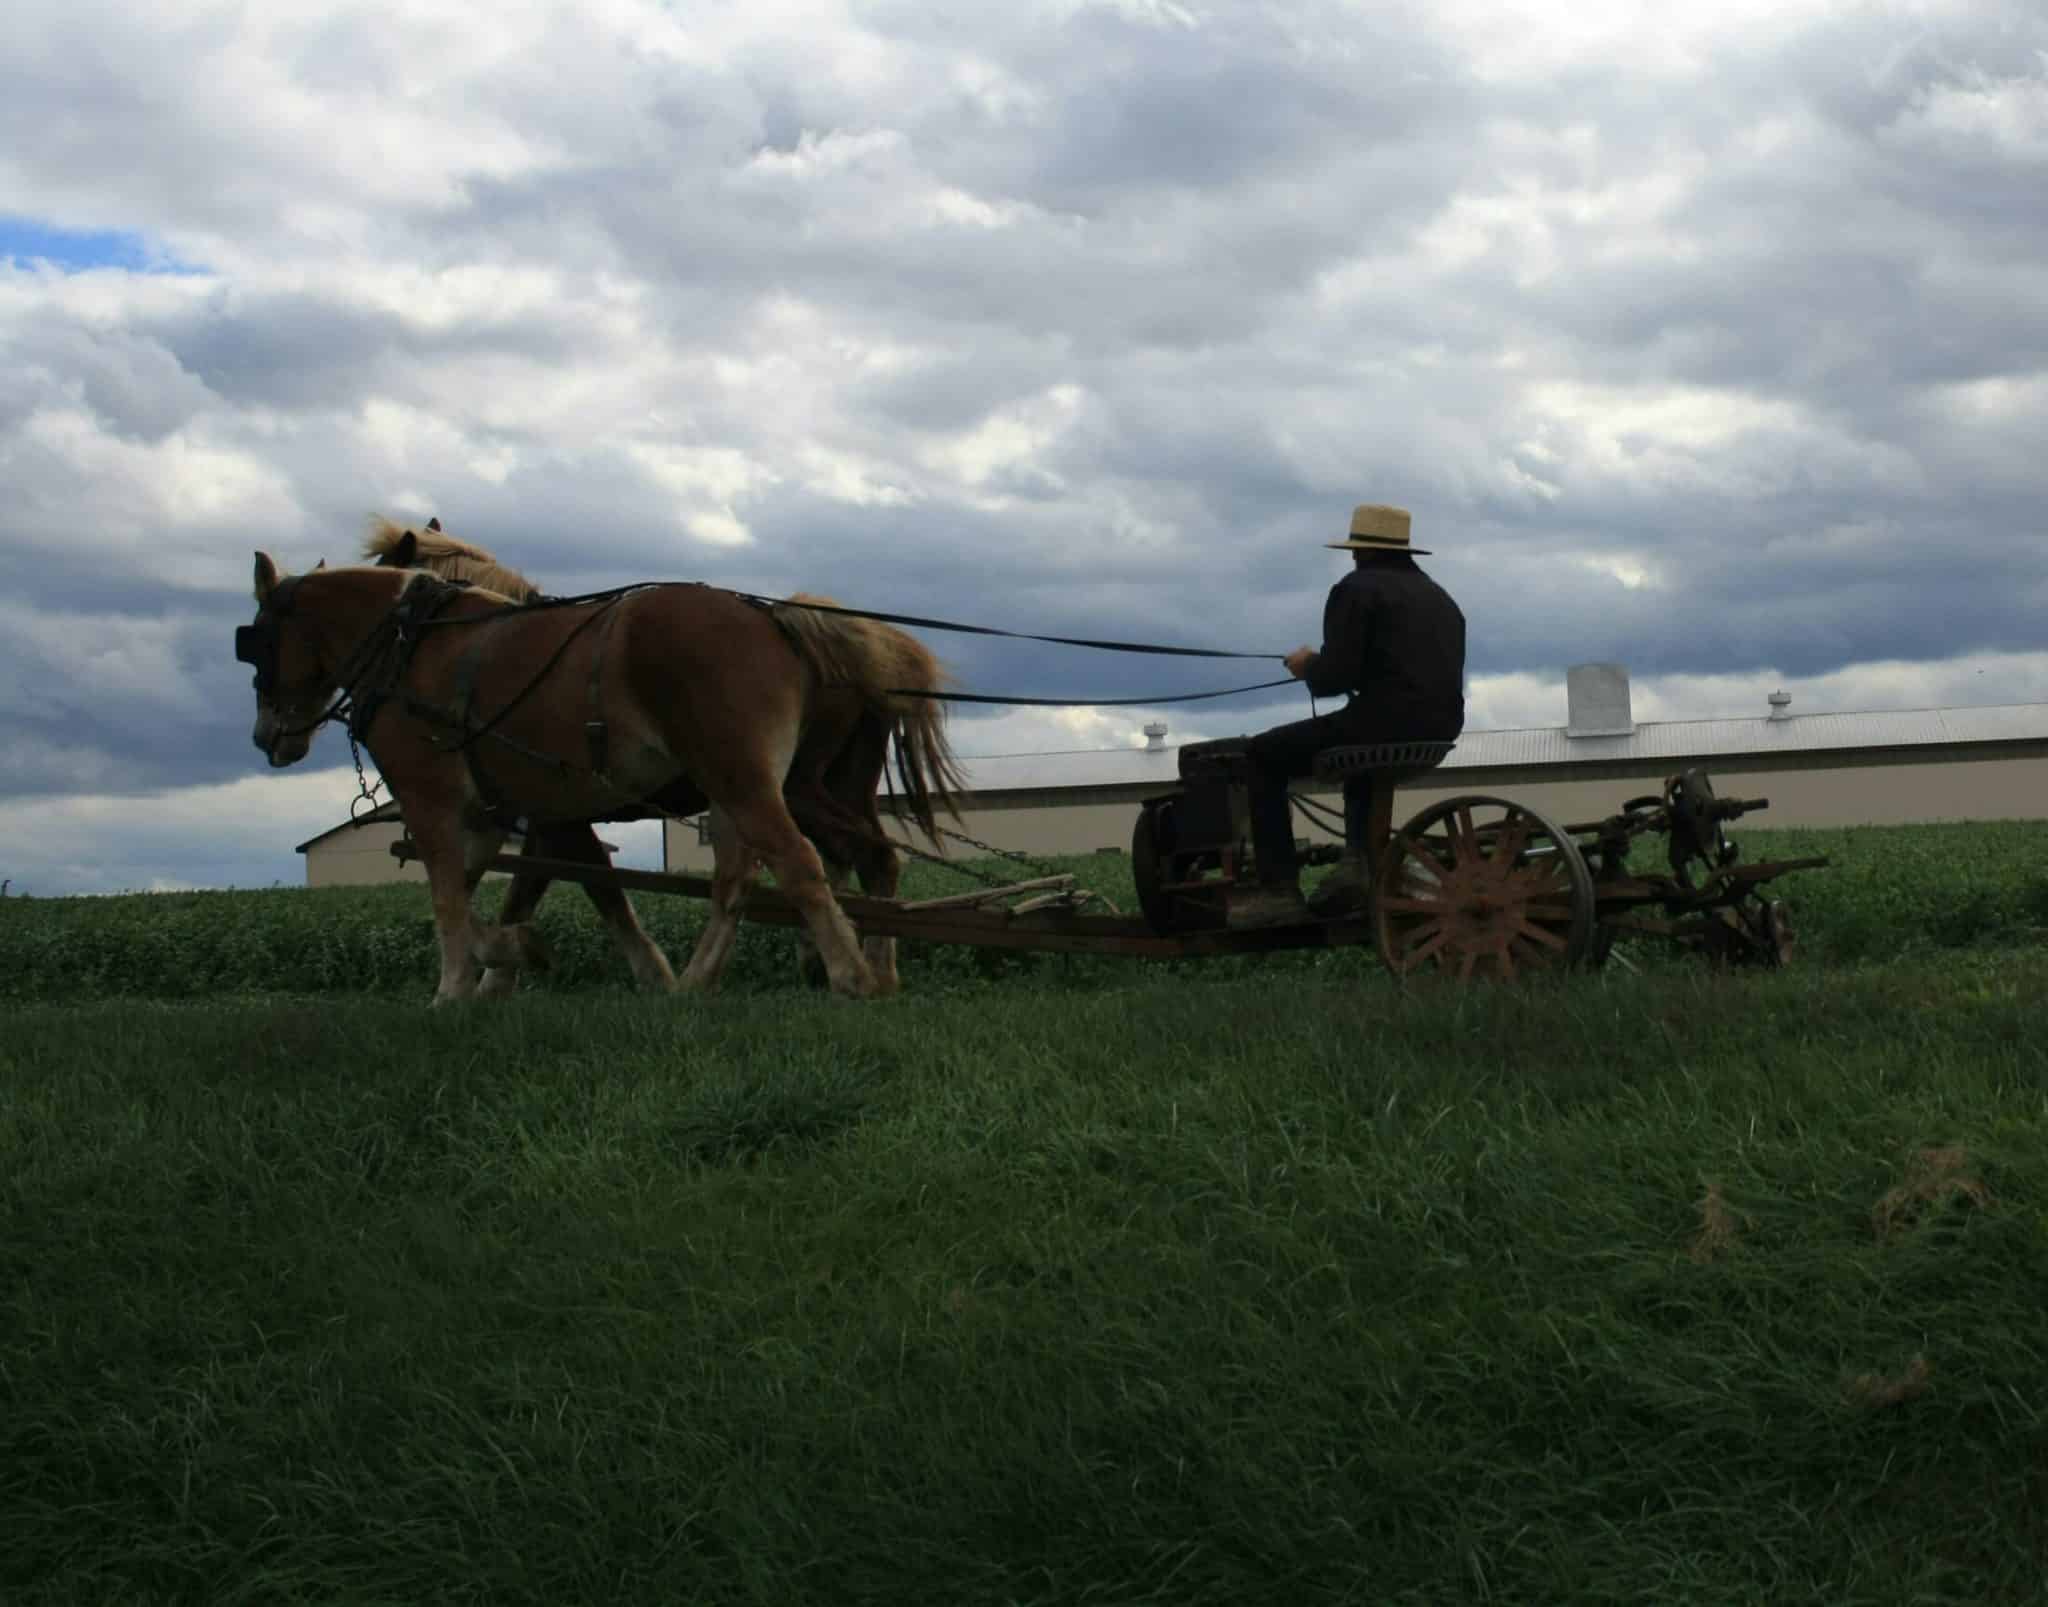 An Amish man ploughing